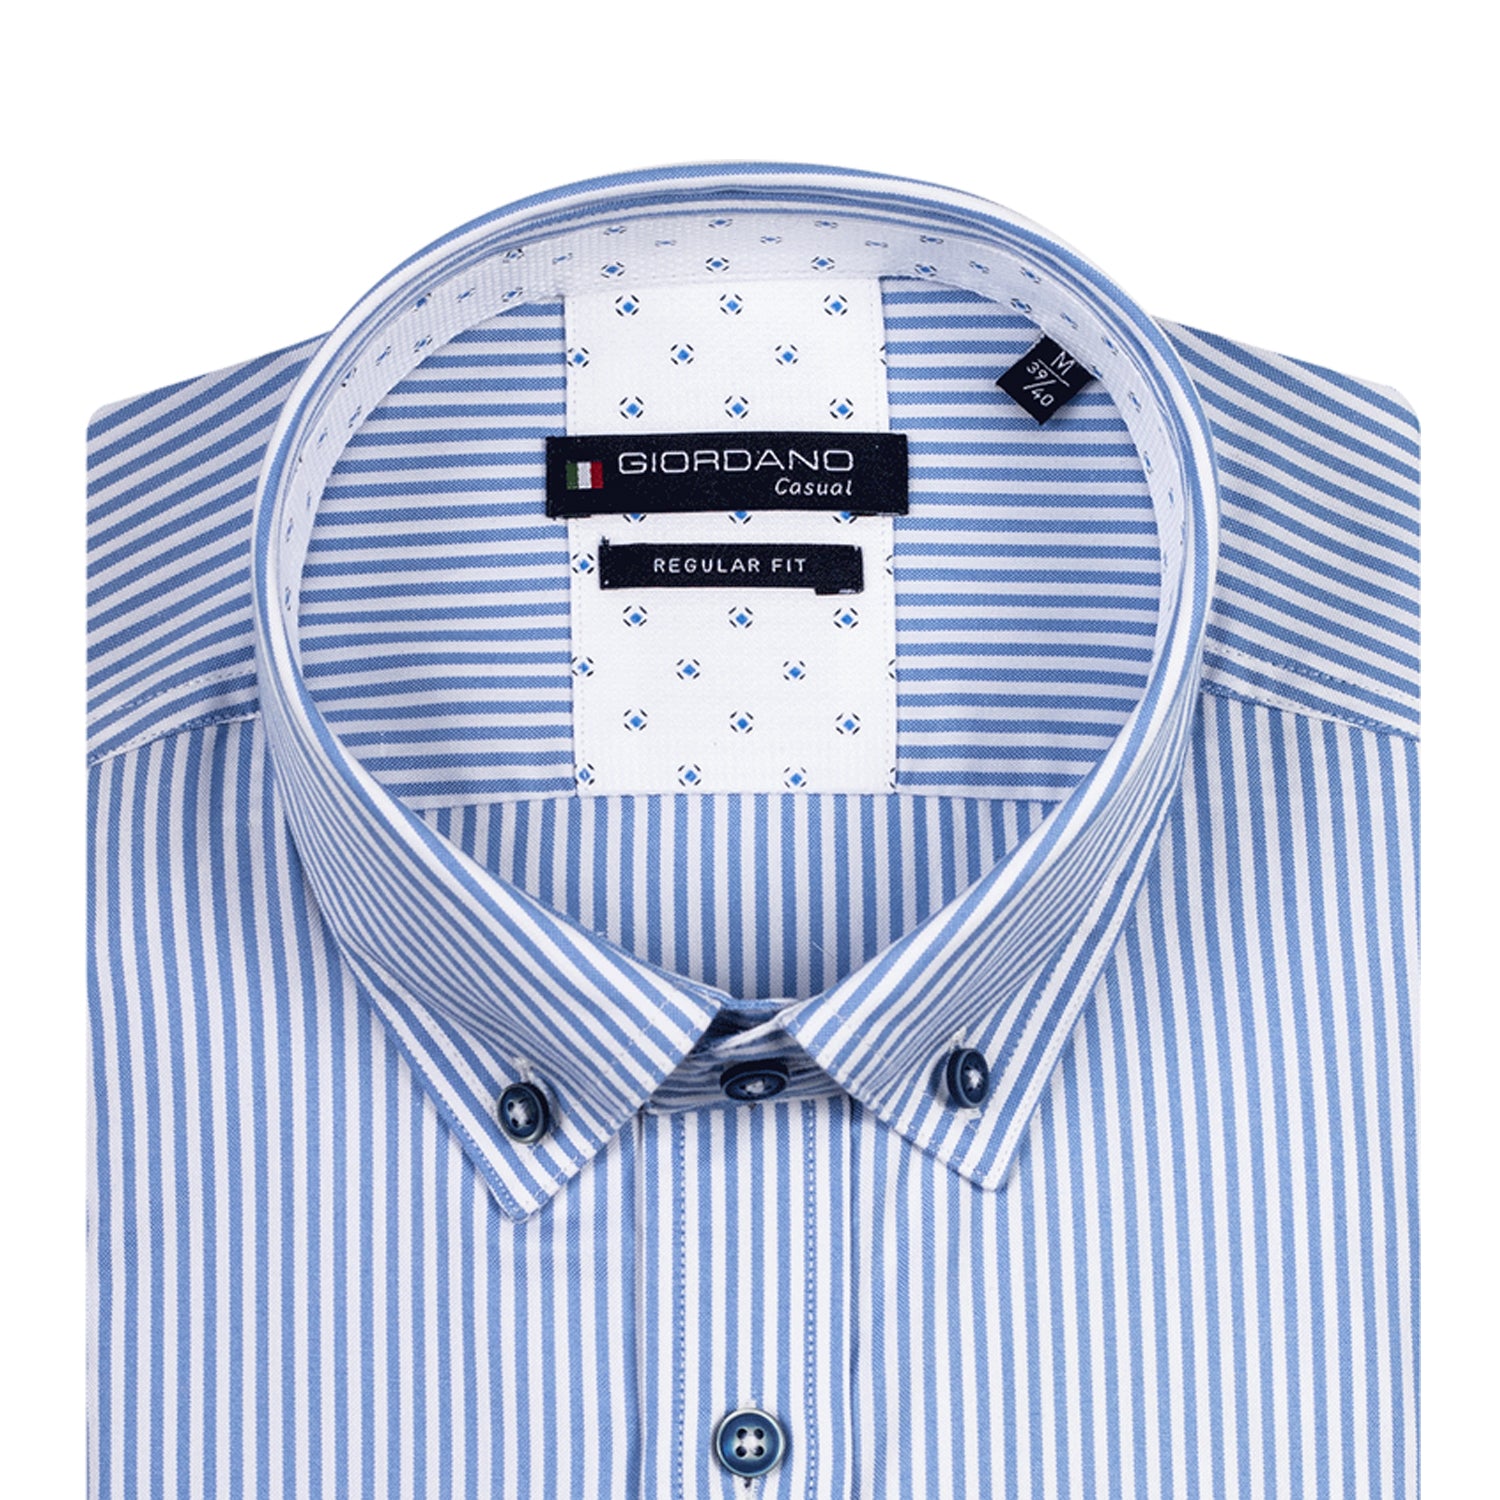 Giordano Men's Oxford Regular Fit Shirt - Jeans Blue Stripe